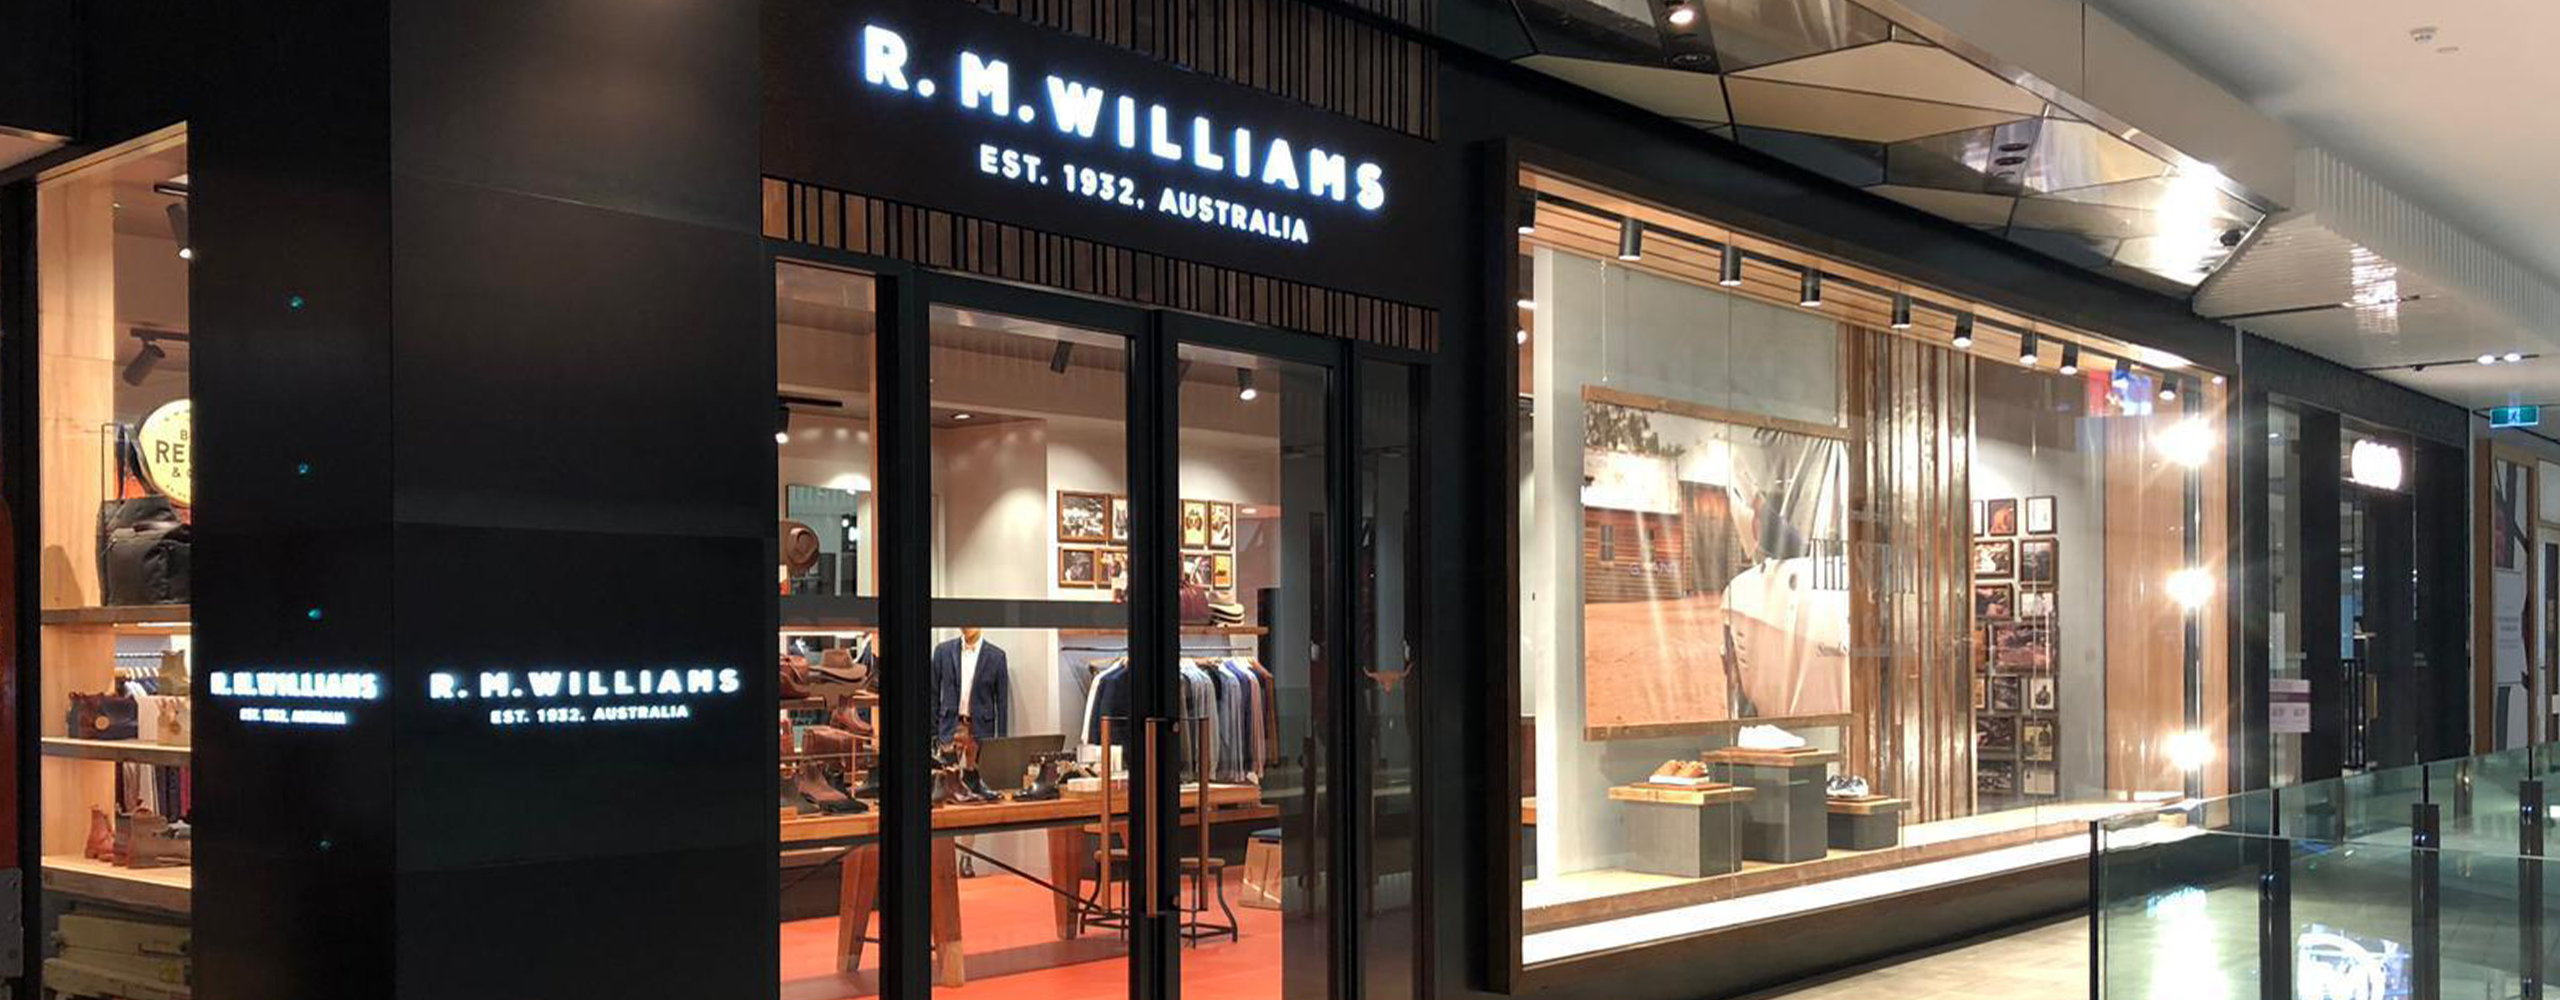 rm williams store near me